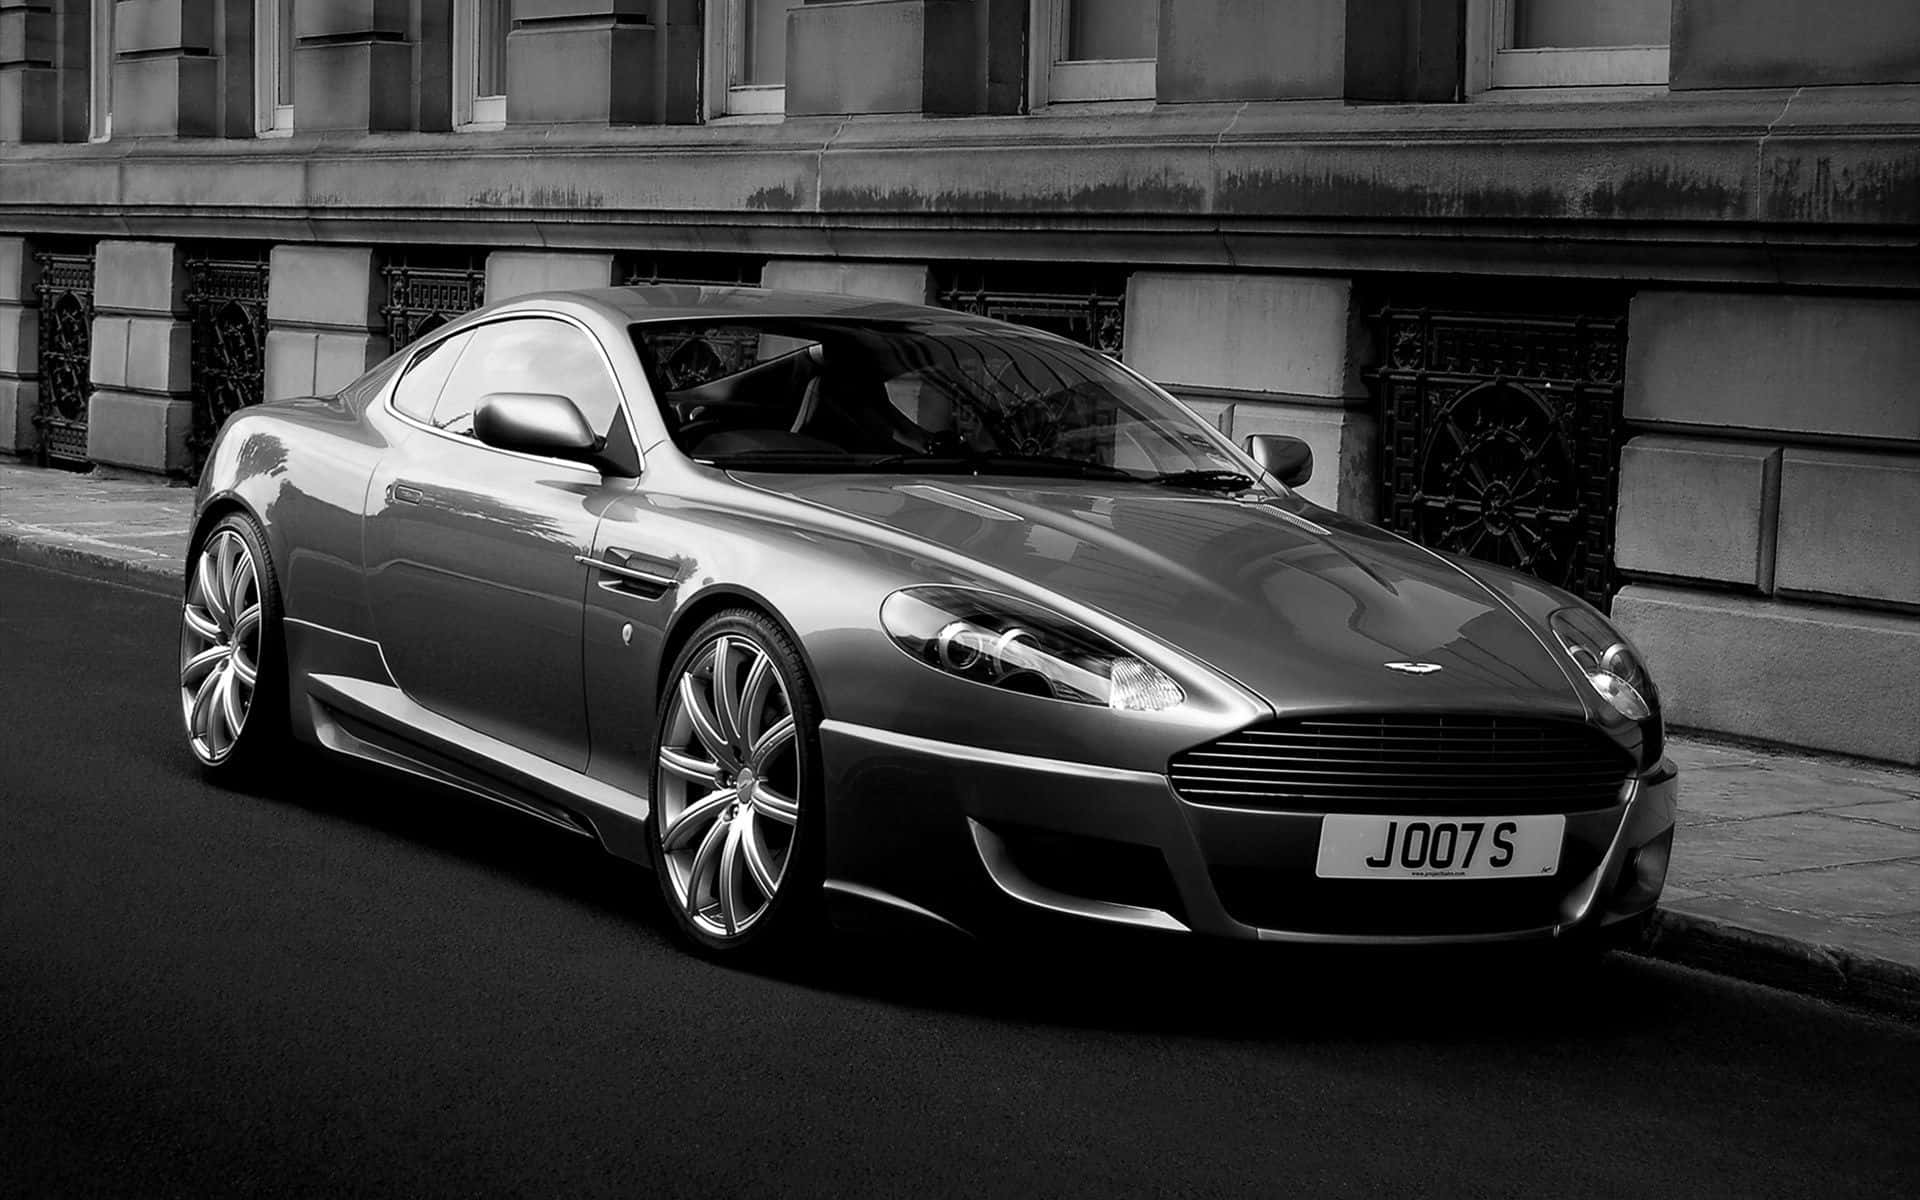 Aston Martin DB9 Luxury Sports Car Wallpaper